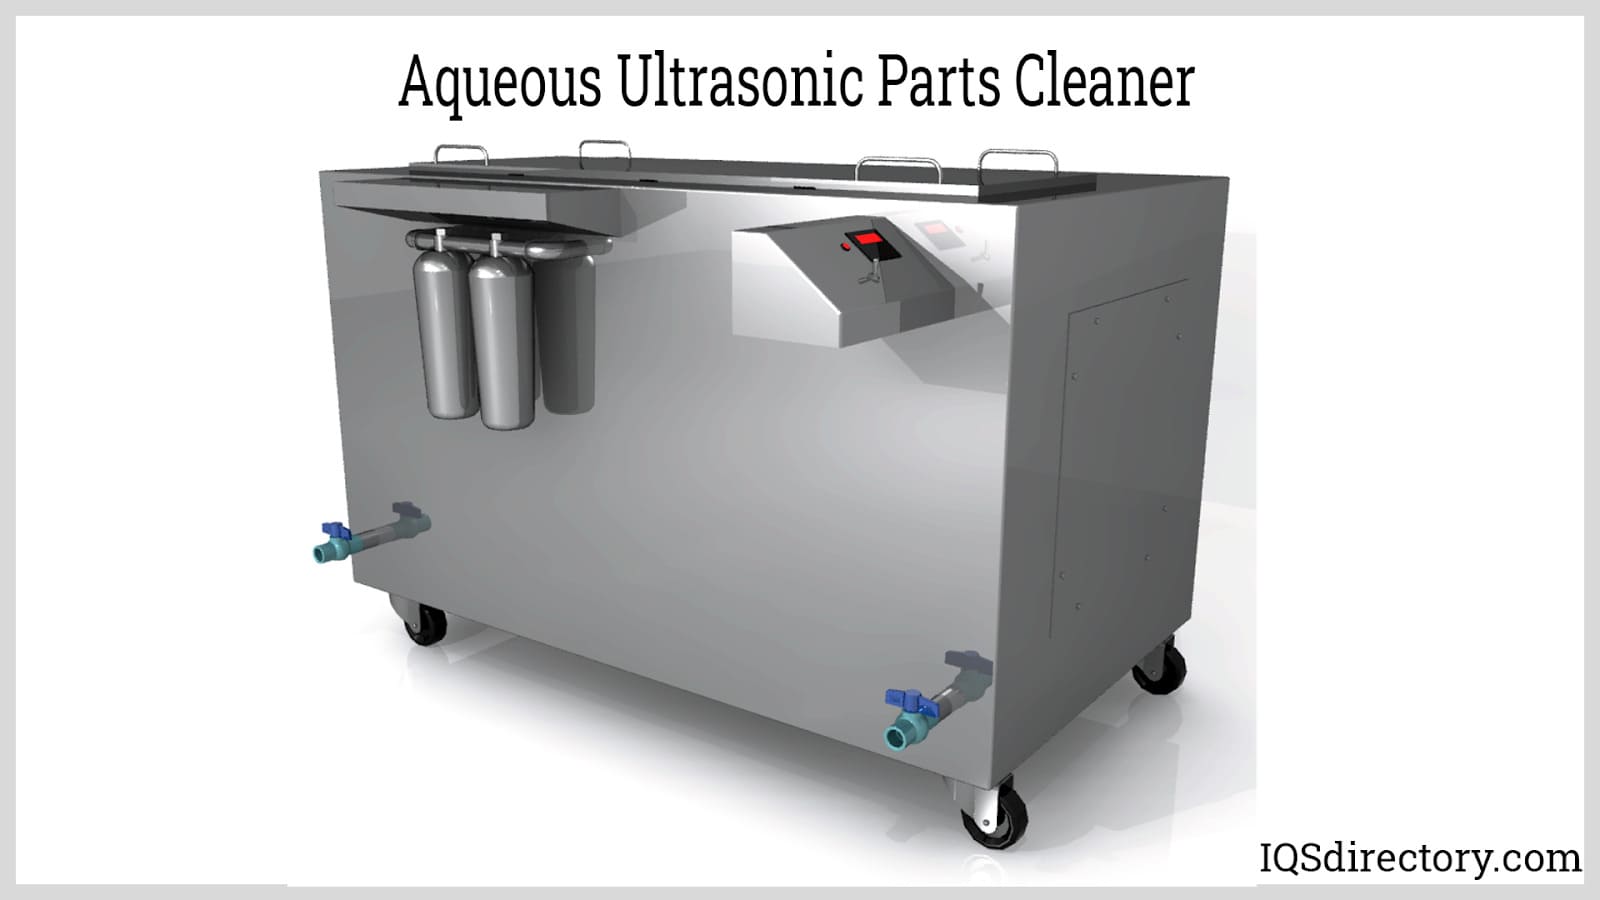 Aqueous Ultrasonic Parts Cleaner